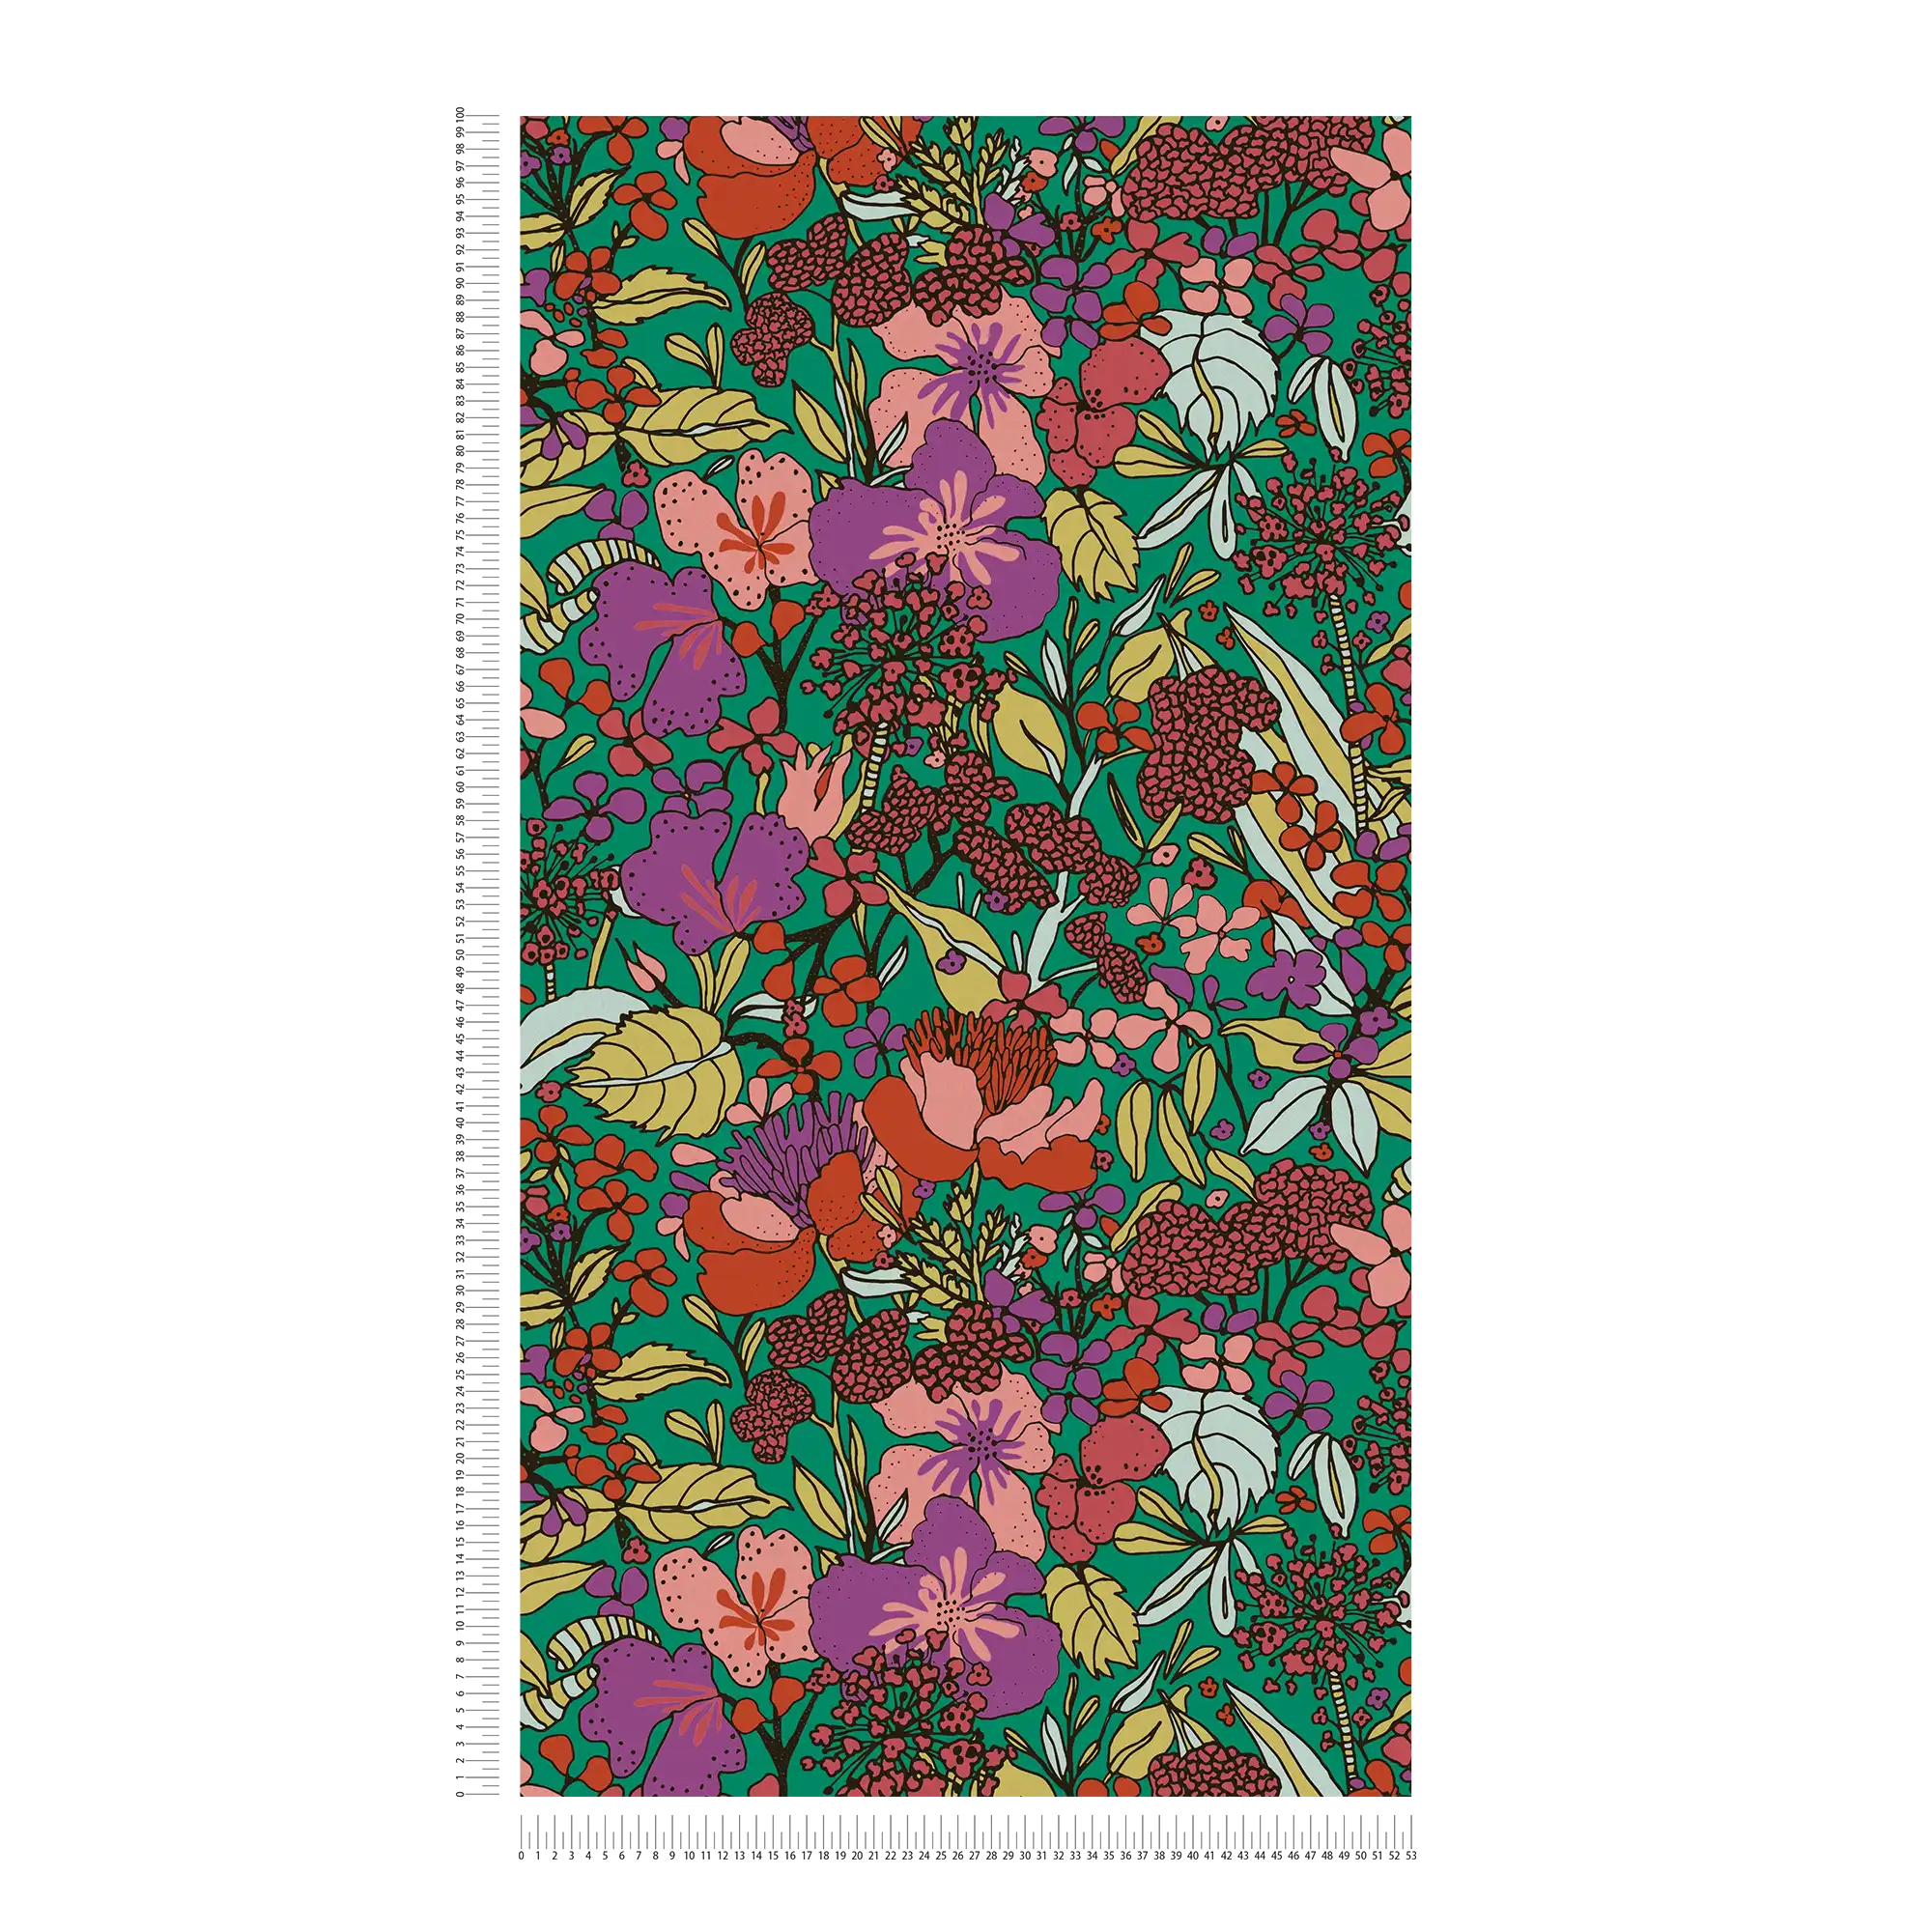             papel pintado flores coloridas en estilo colour block - colorido, verde, rojo
        